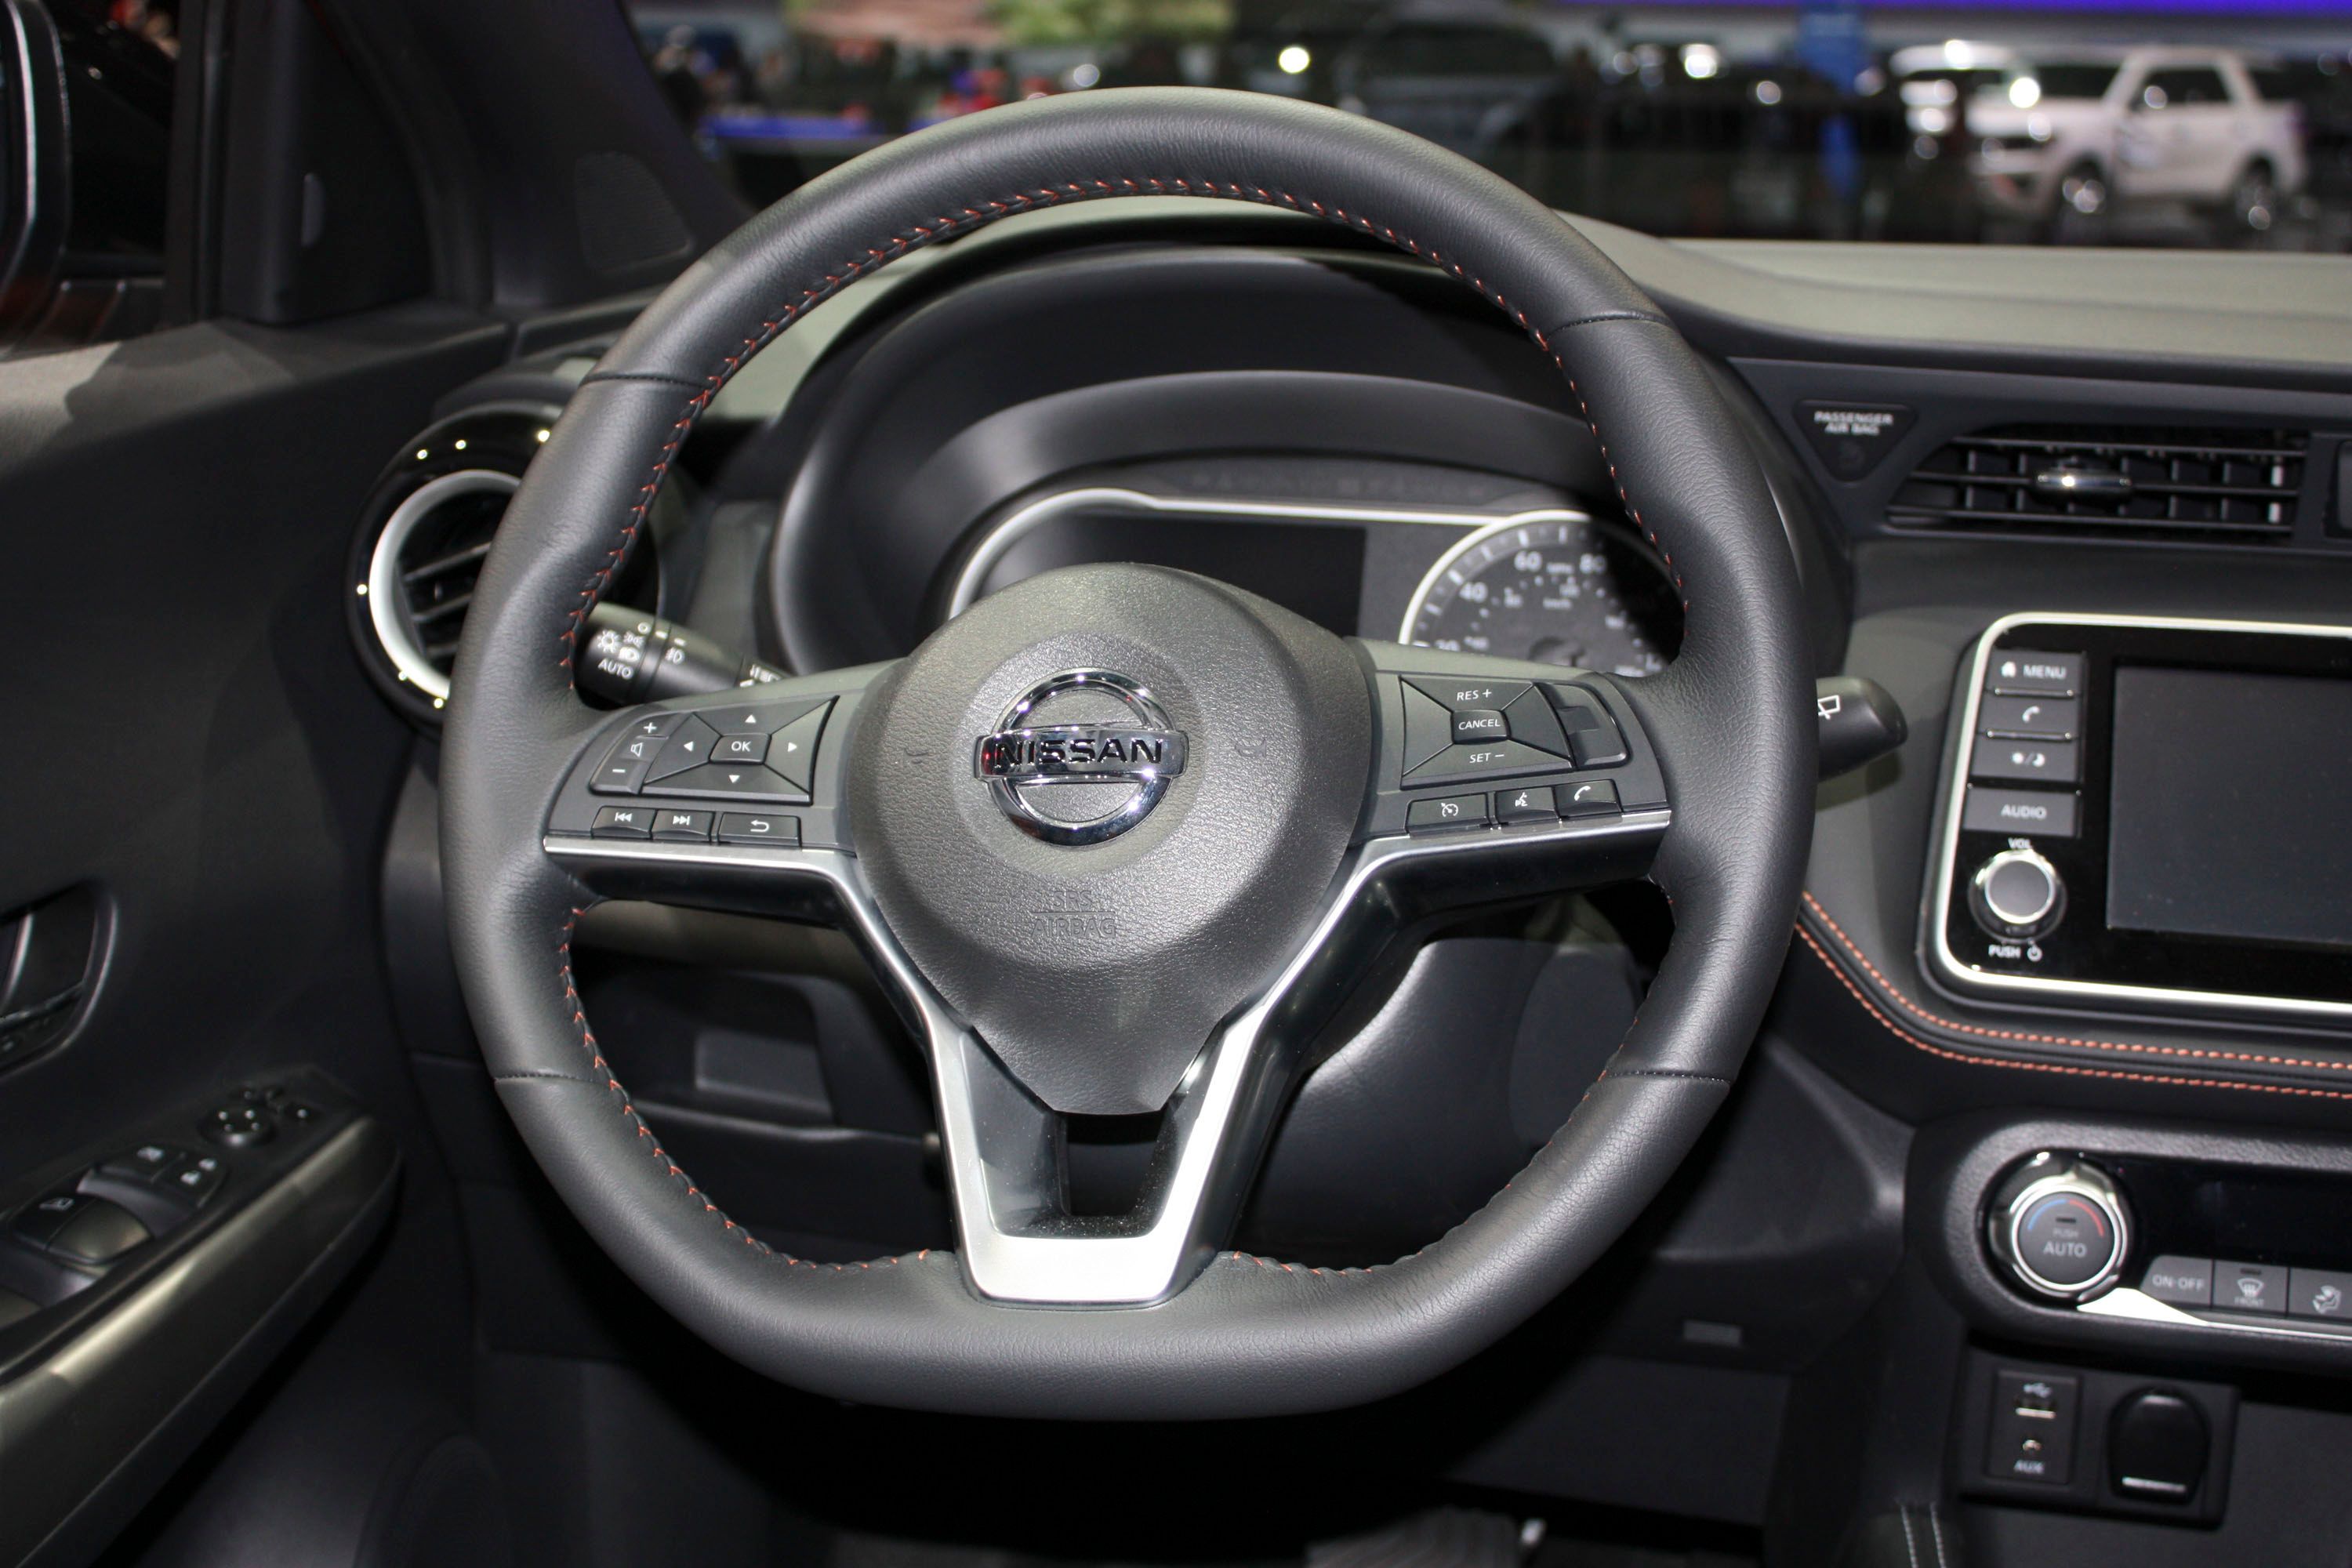 Flat-bottom steering wheel